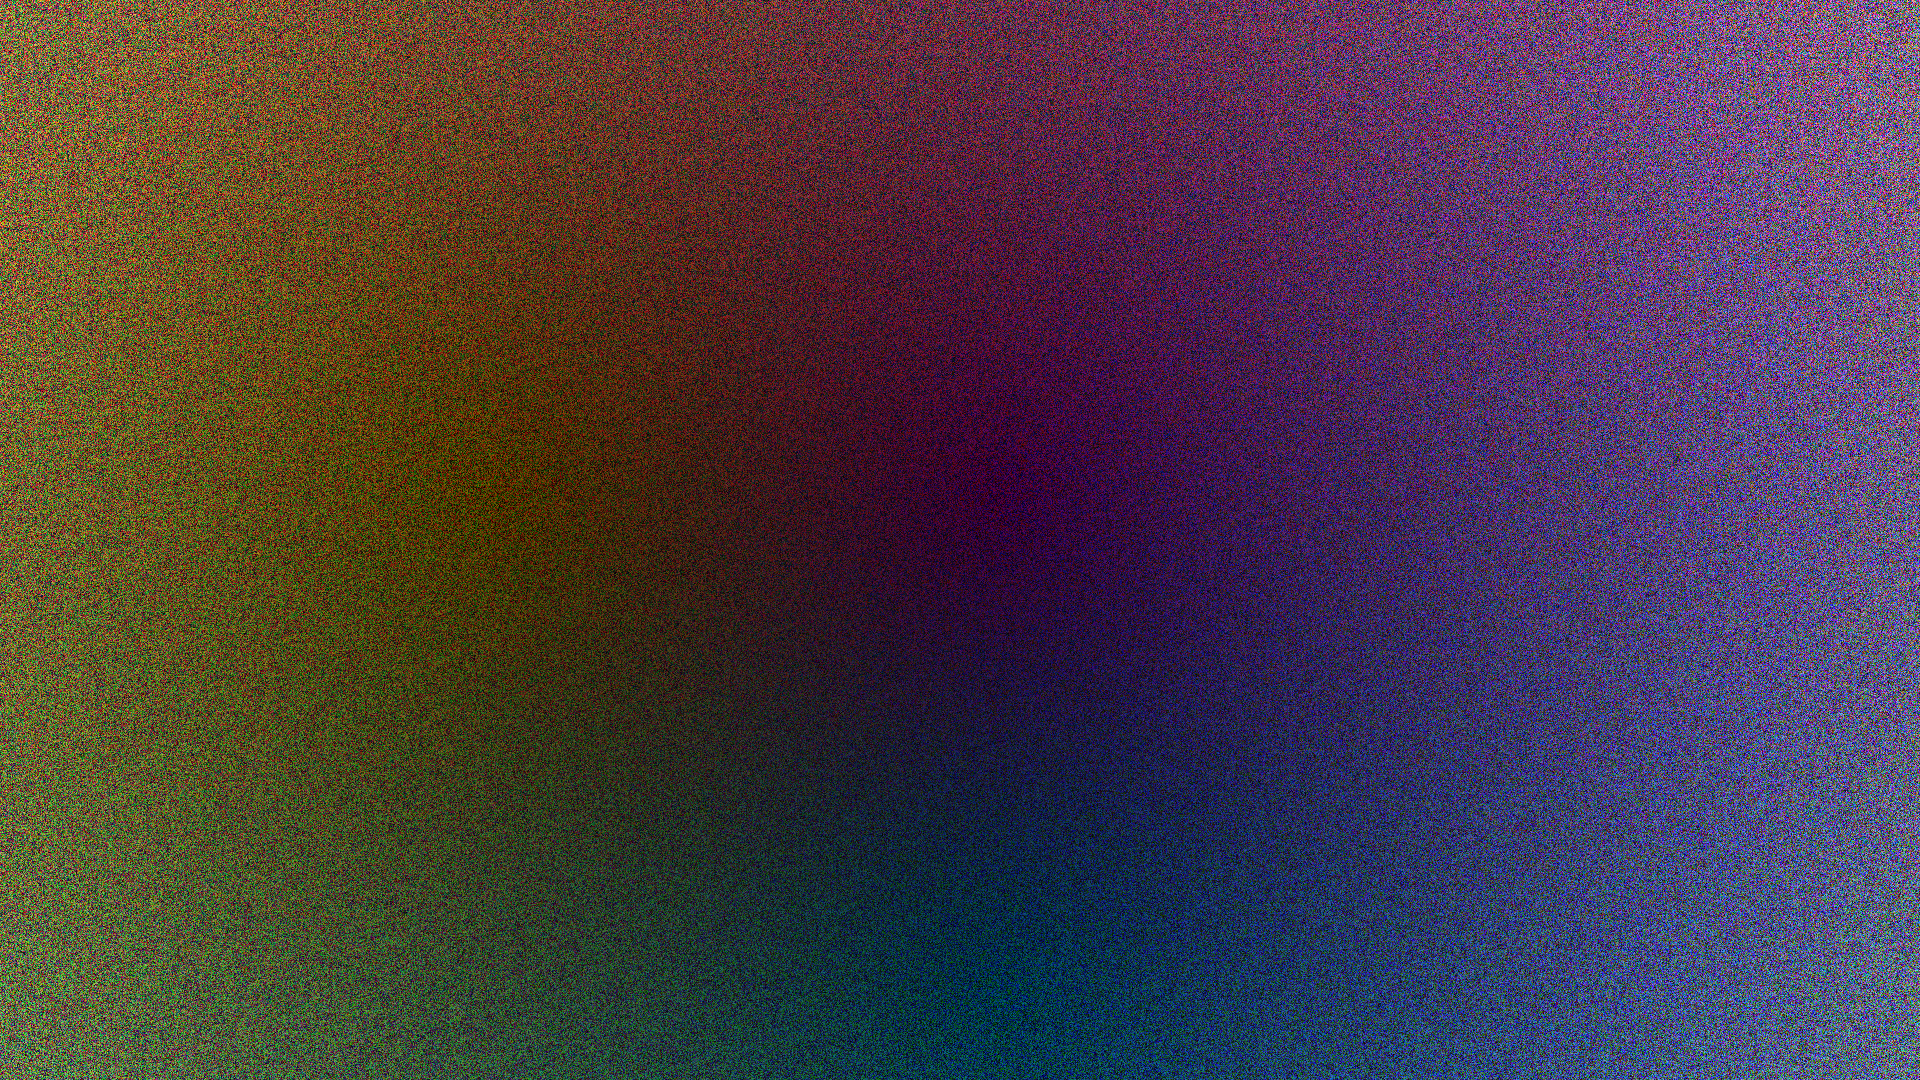 General 1920x1080 pixels noise minimalism colorful simple background